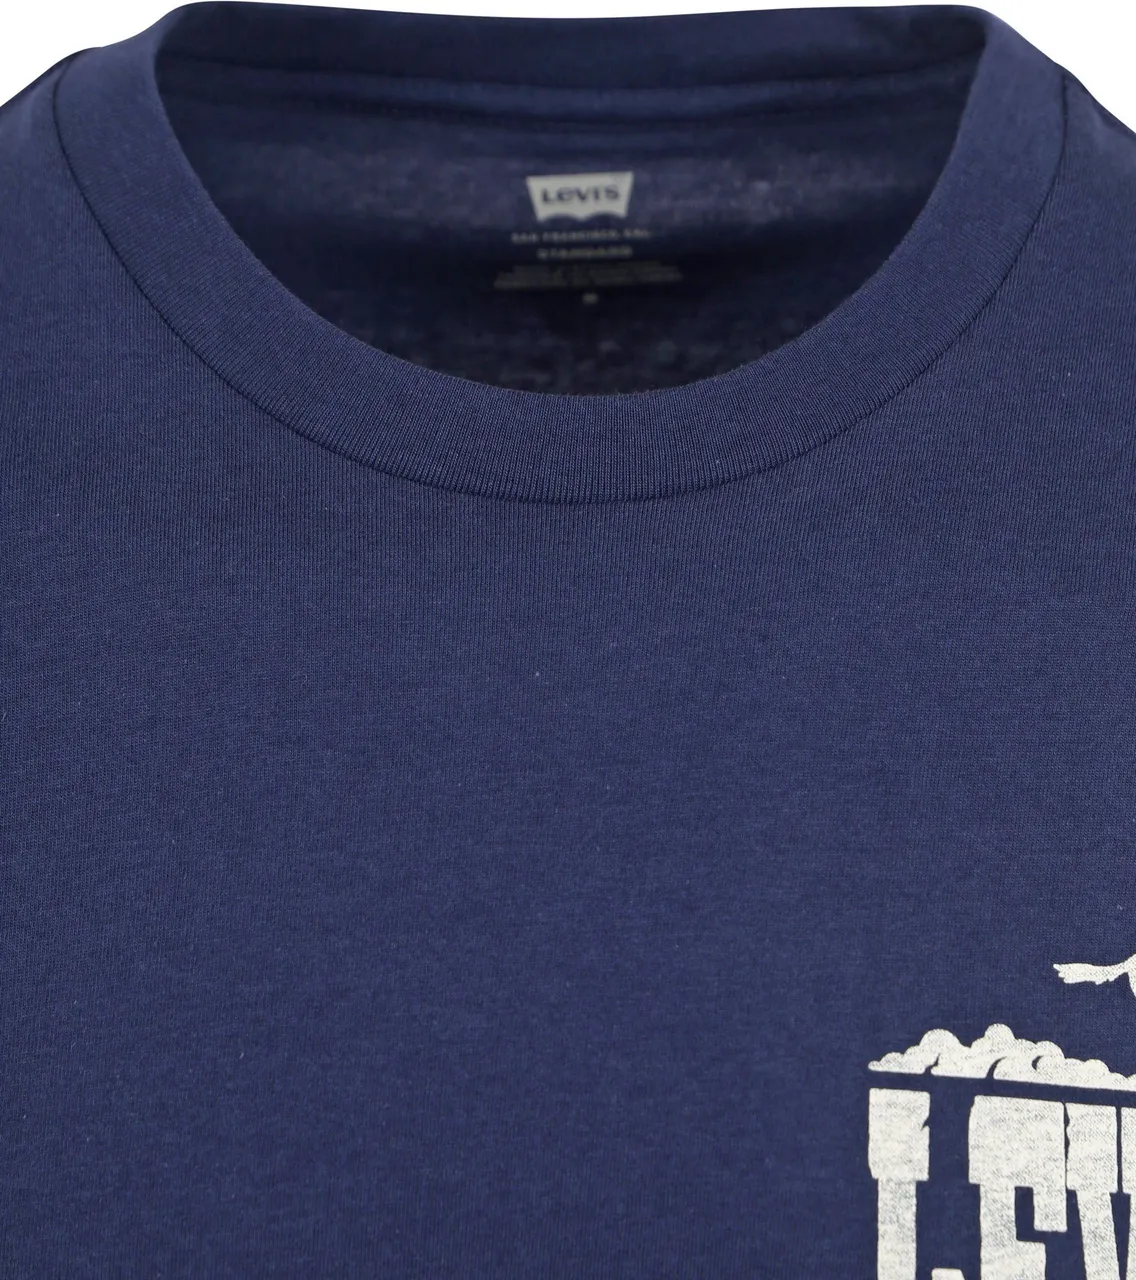 Levi's T Shirt Graphic Navy Blue Dark Blue